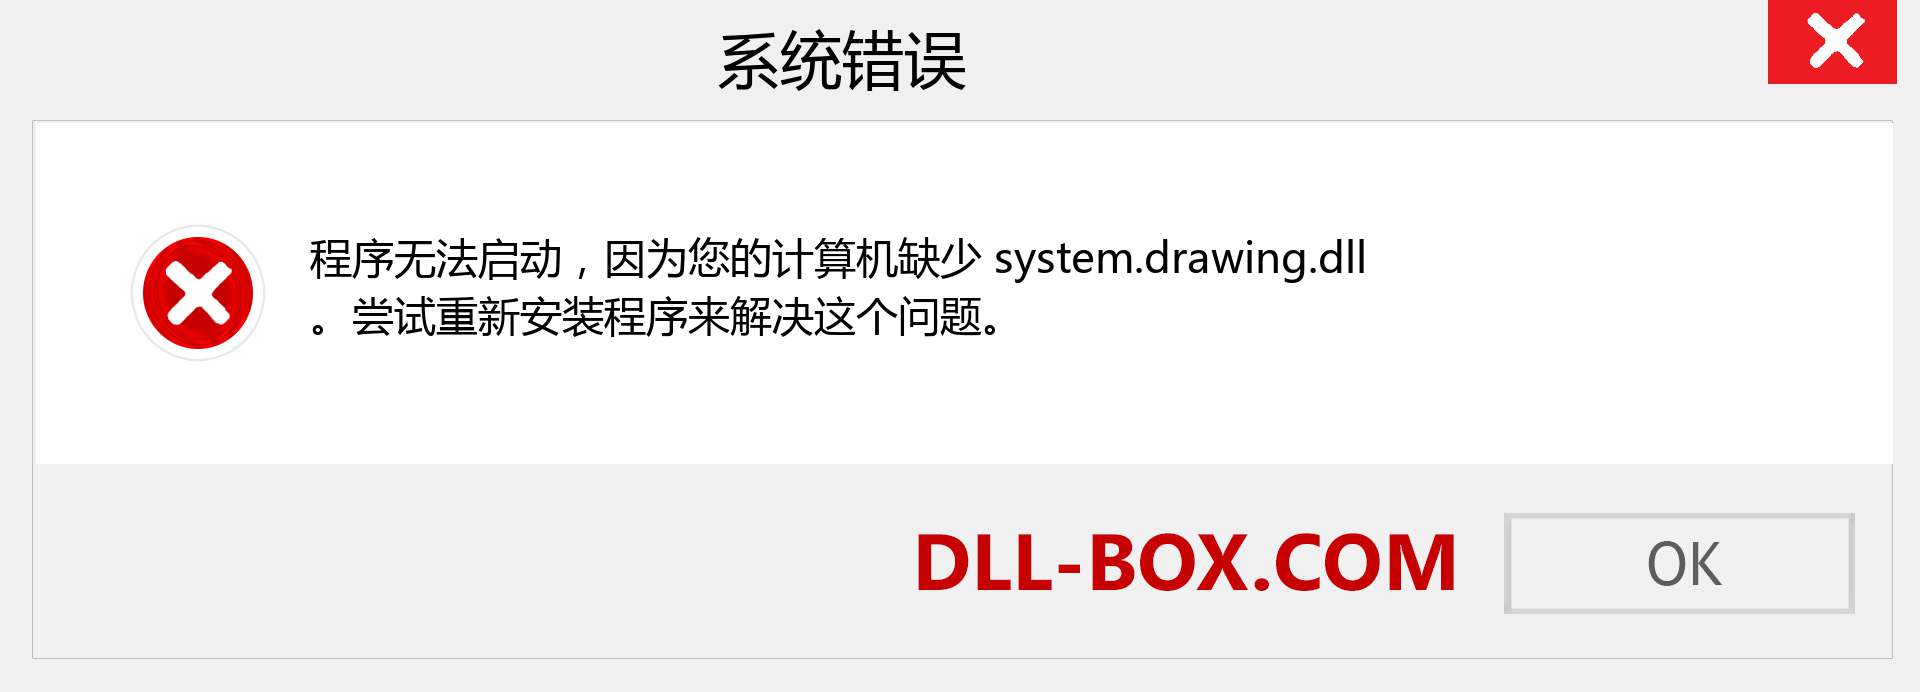 system.drawing.dll 文件丢失？。 适用于 Windows 7、8、10 的下载 - 修复 Windows、照片、图像上的 system.drawing dll 丢失错误